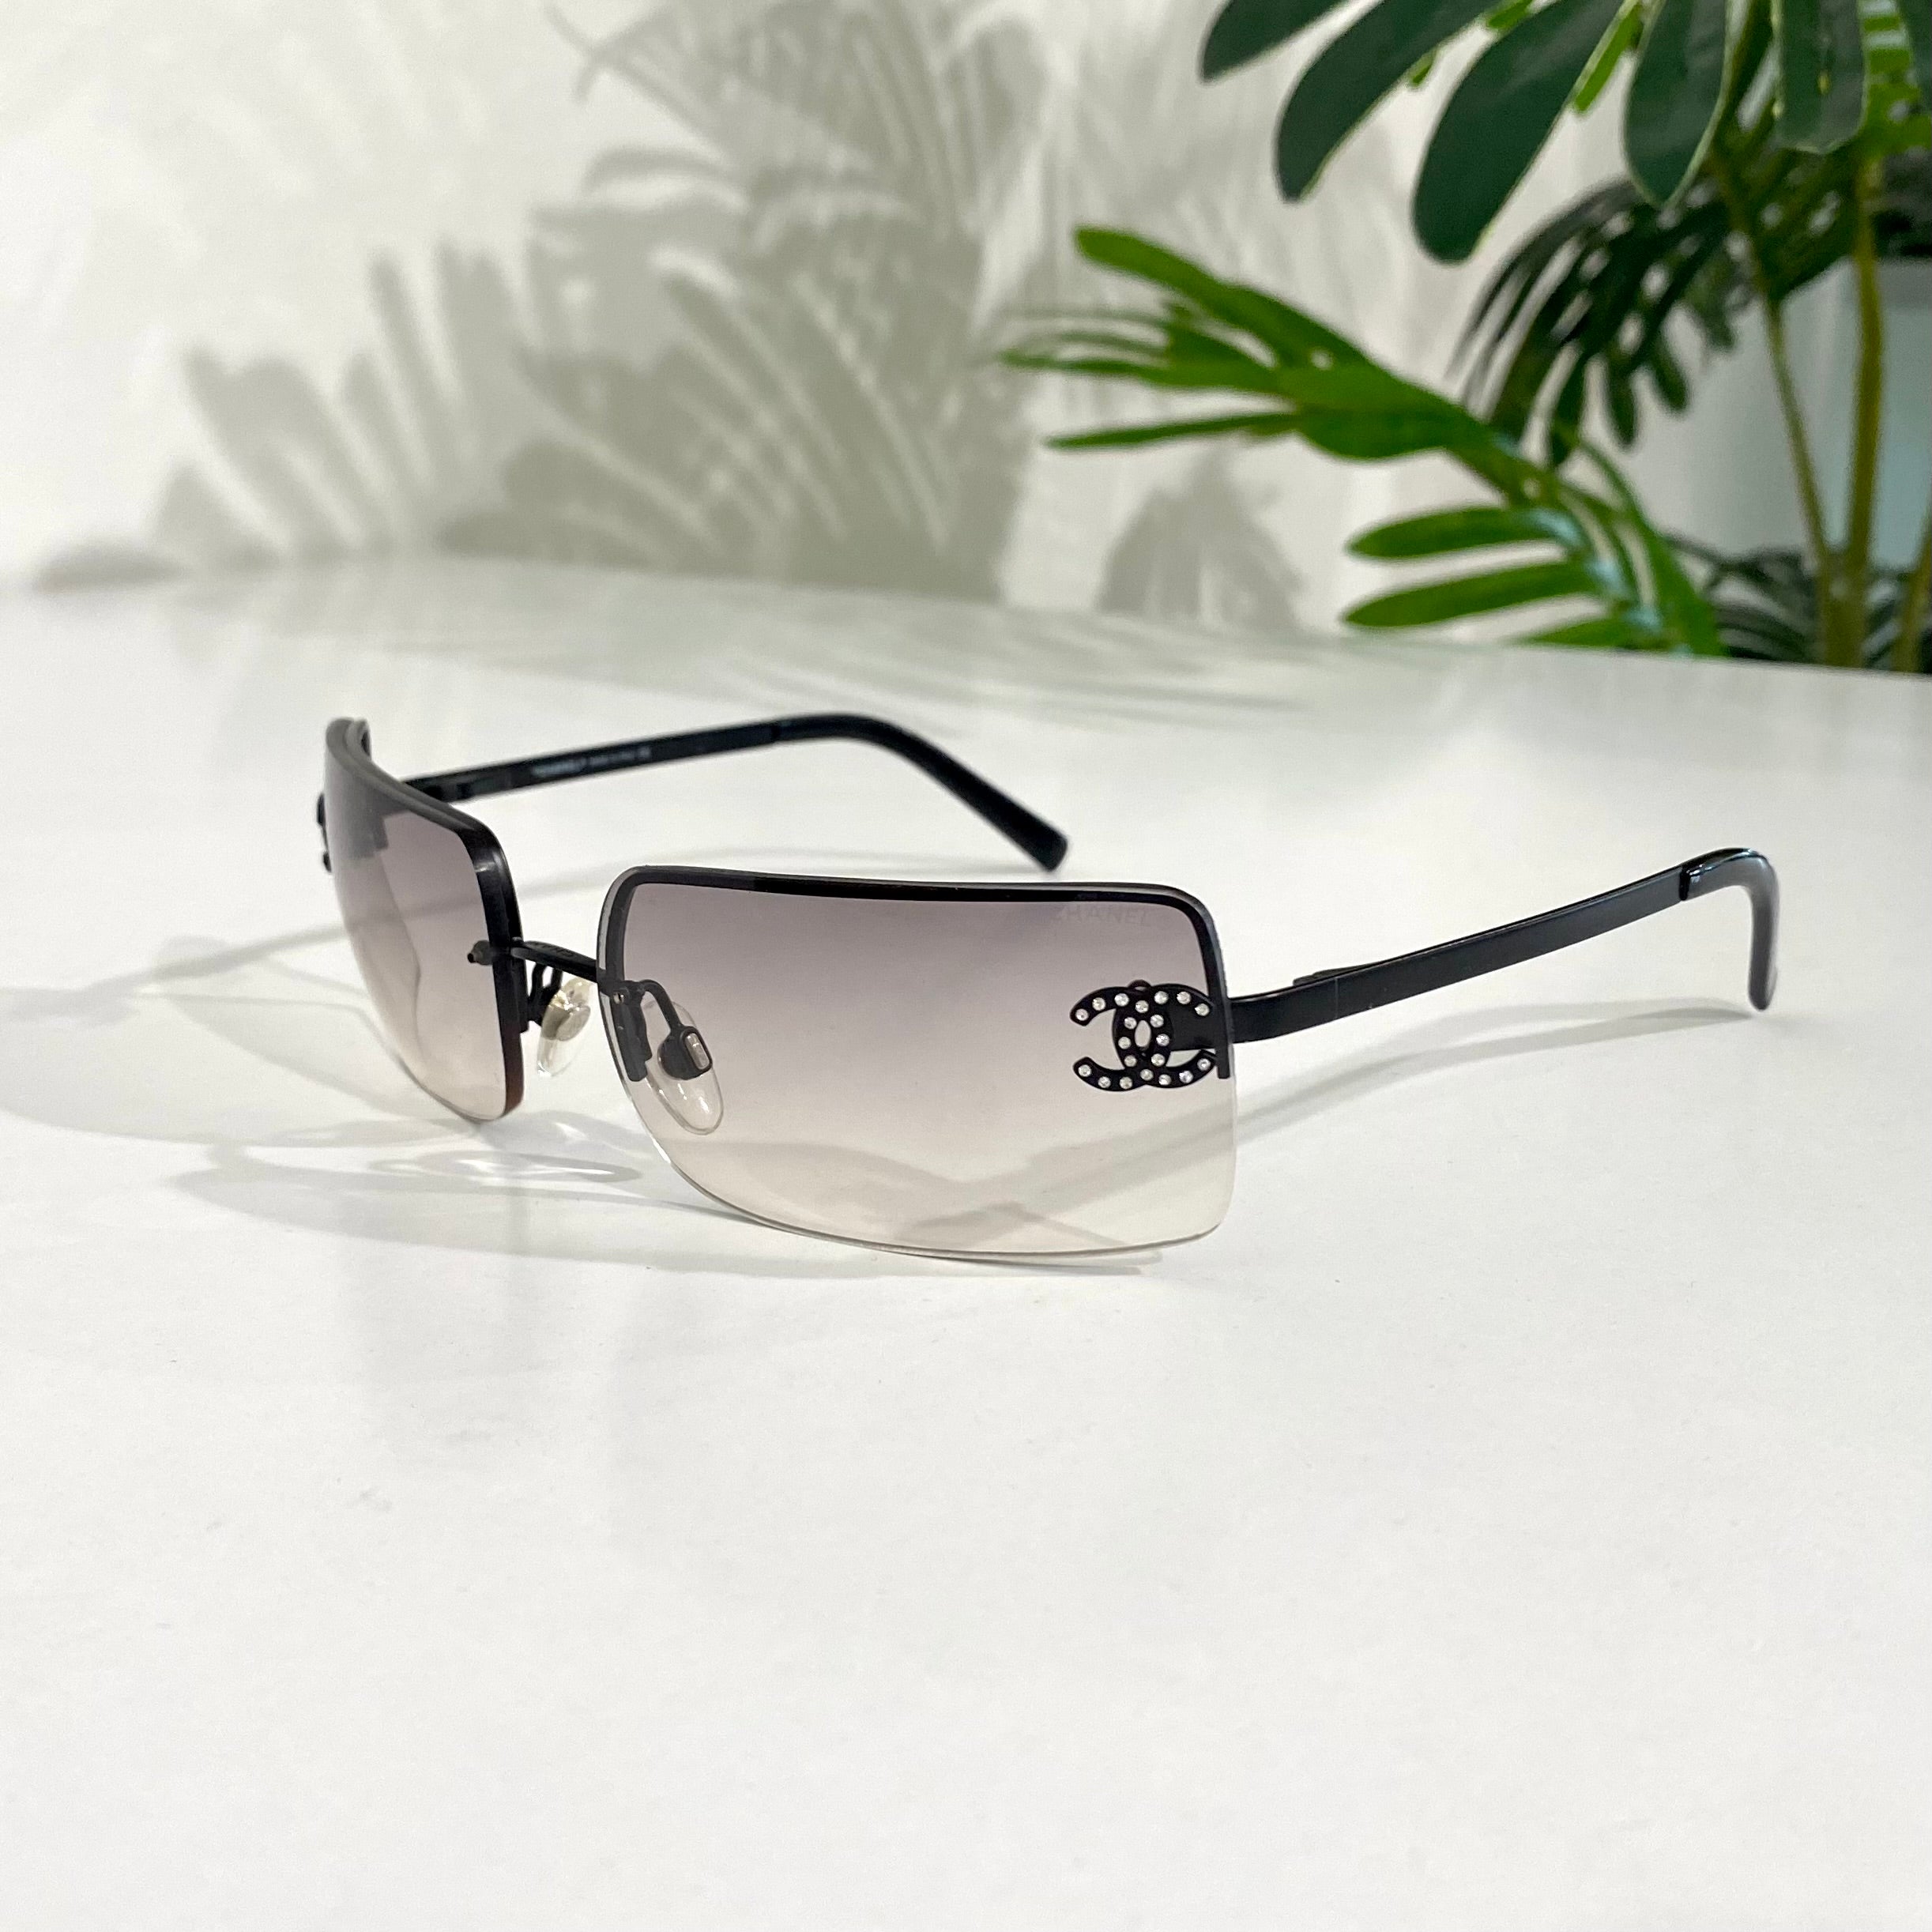 Rimless Gray Gradient Chanel Sunglasses